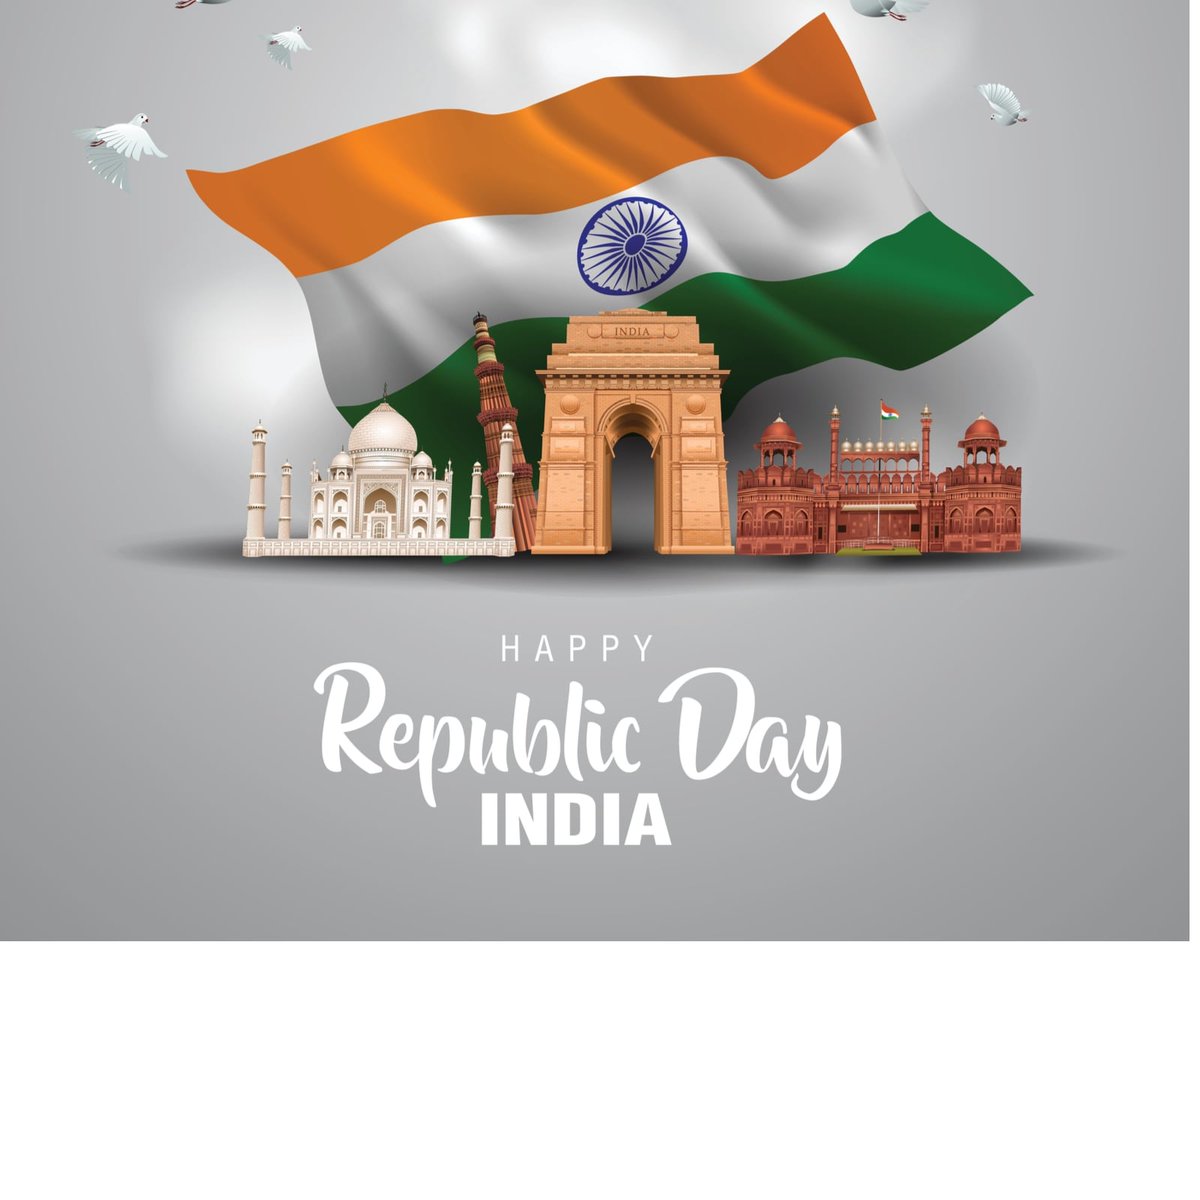 Happy Republic Day 🇮🇳
.
#RepublicDay2022 #RepublicDayIndia #Sajjaddelafrooz #India